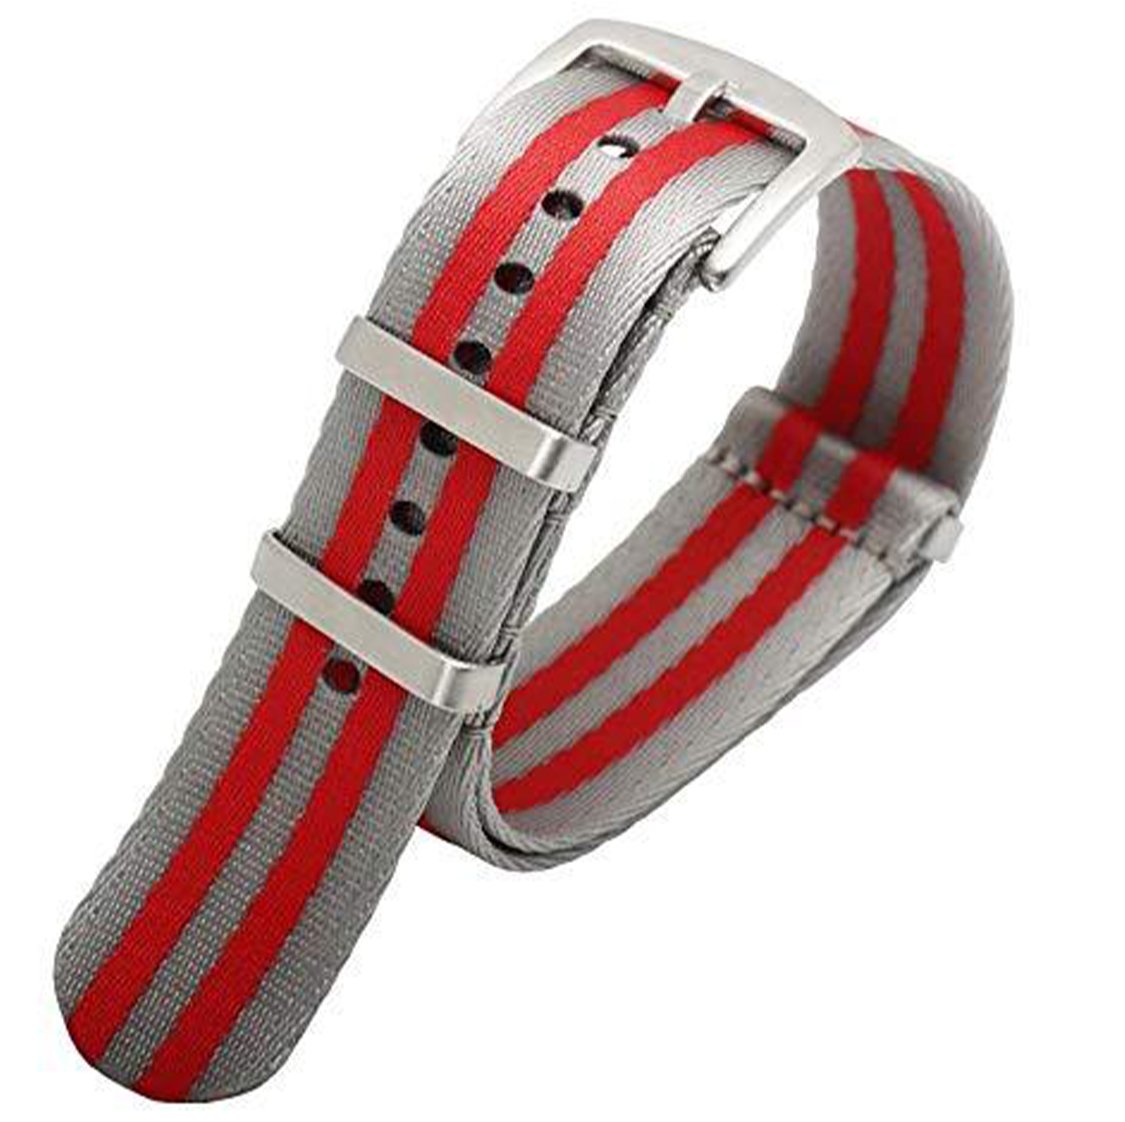 Seatbelt Ballistic Nylon Strap Grey with Red Stripe -StrapSeeker